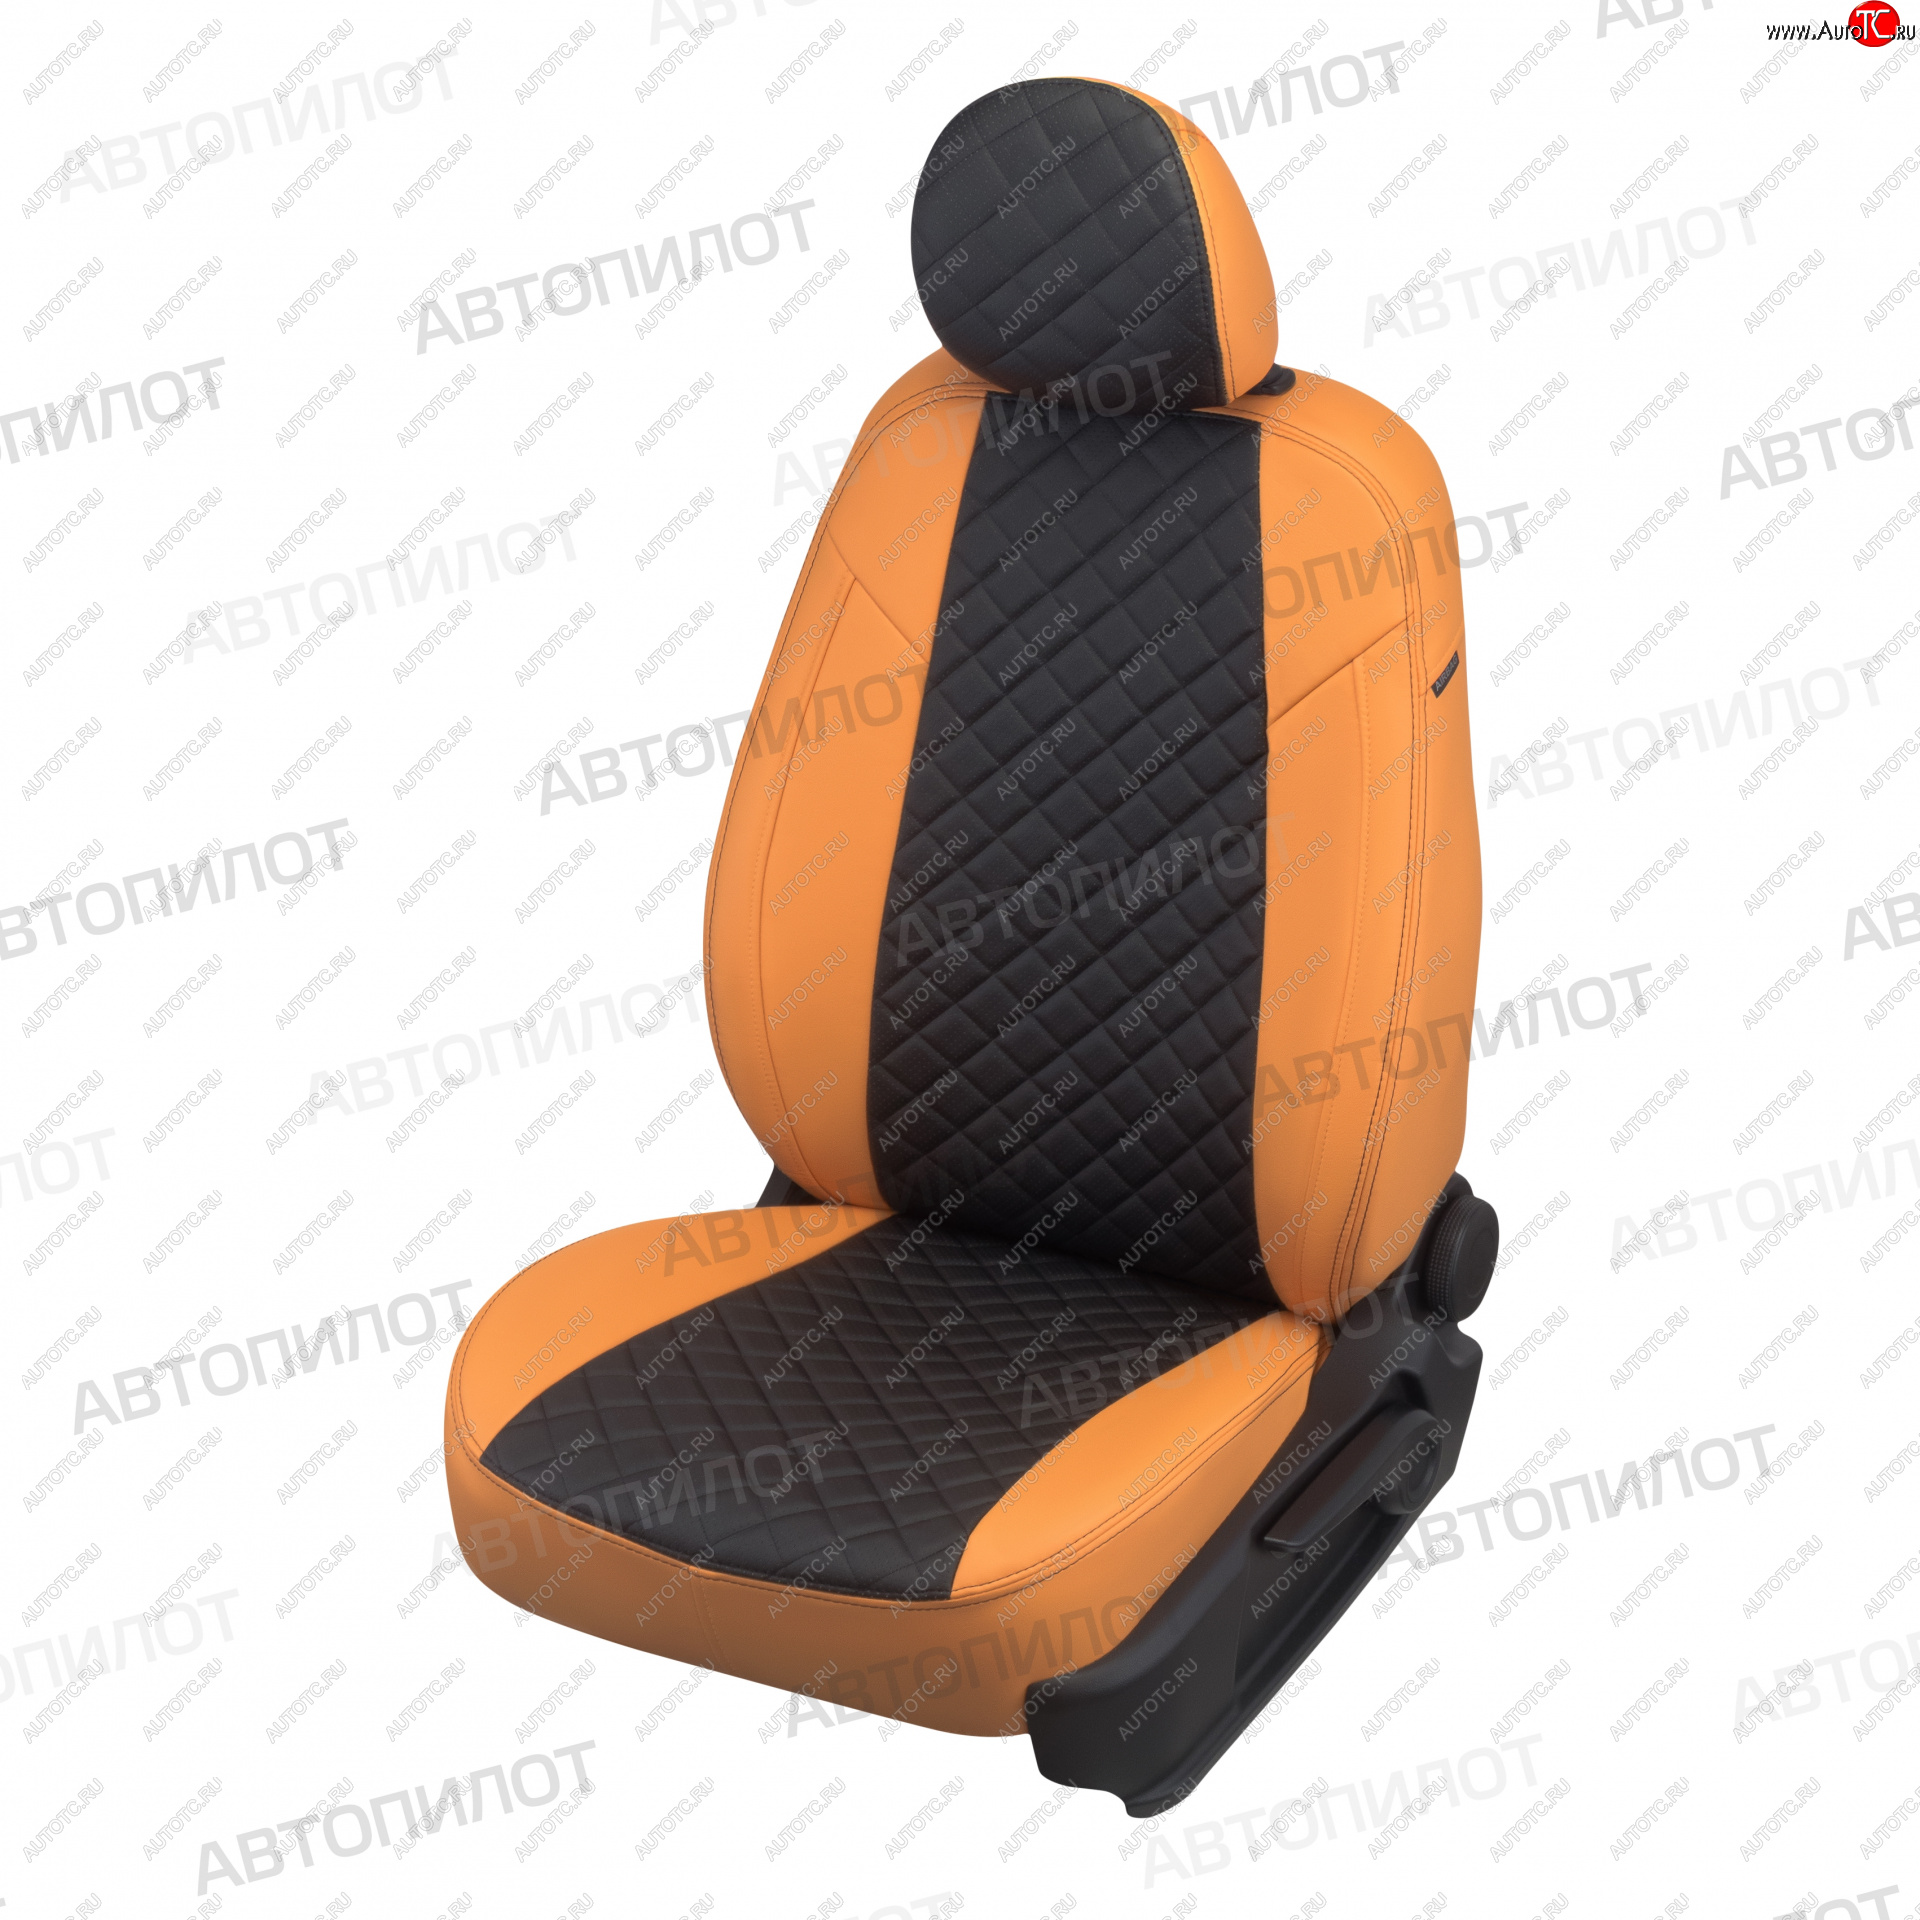 13 999 р. Чехлы сидений (экокожа) Автопилот Ромб  Hyundai Sonata  NF (2004-2010) (оранж/черный)